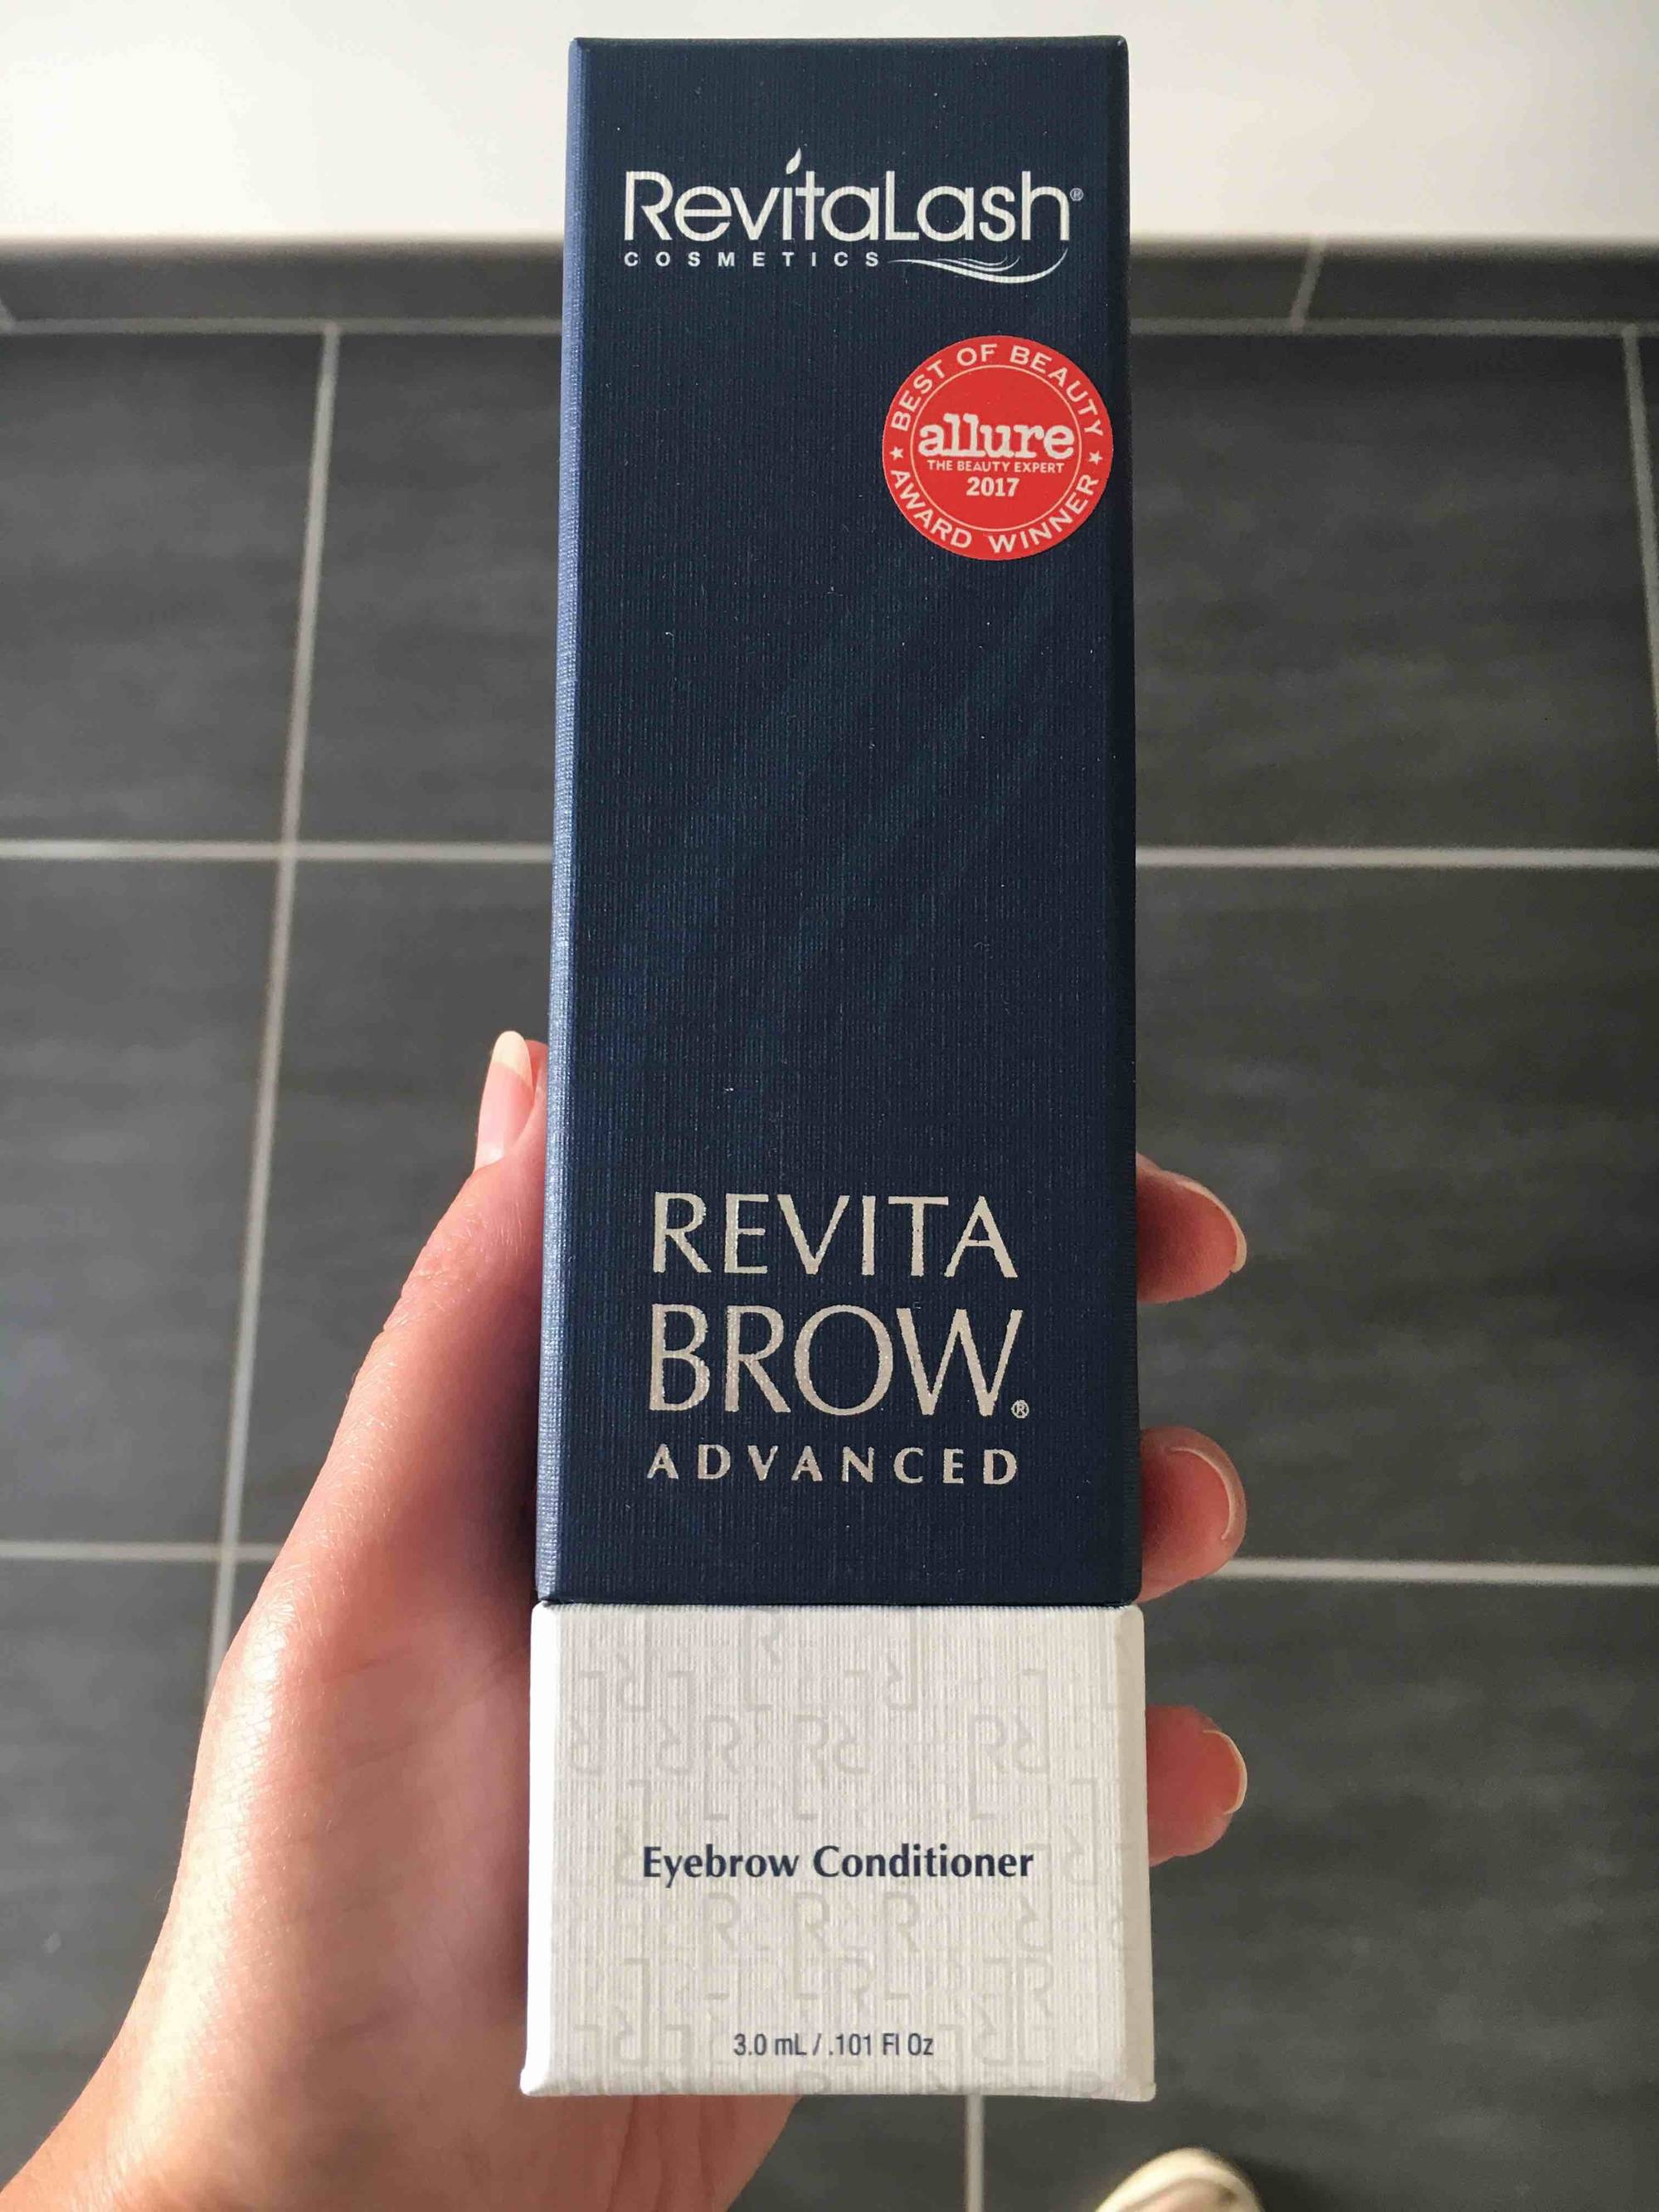 REVITALASH - Revita brow advanced - Eyebrow conditioner